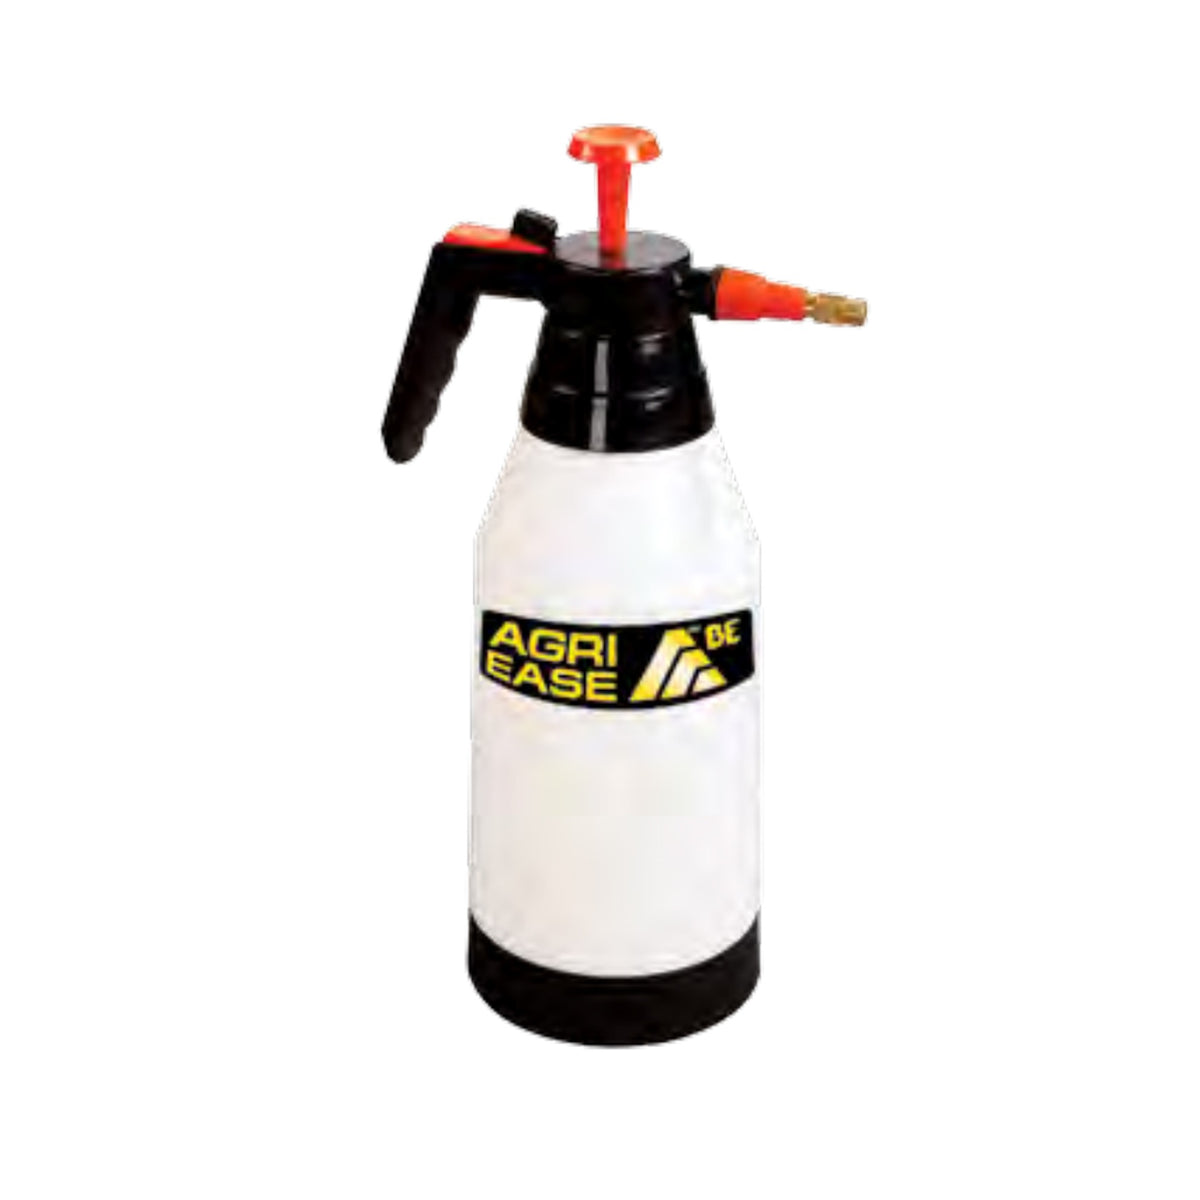 BE Handheld Pump Sprayer 2L (66fl oz)